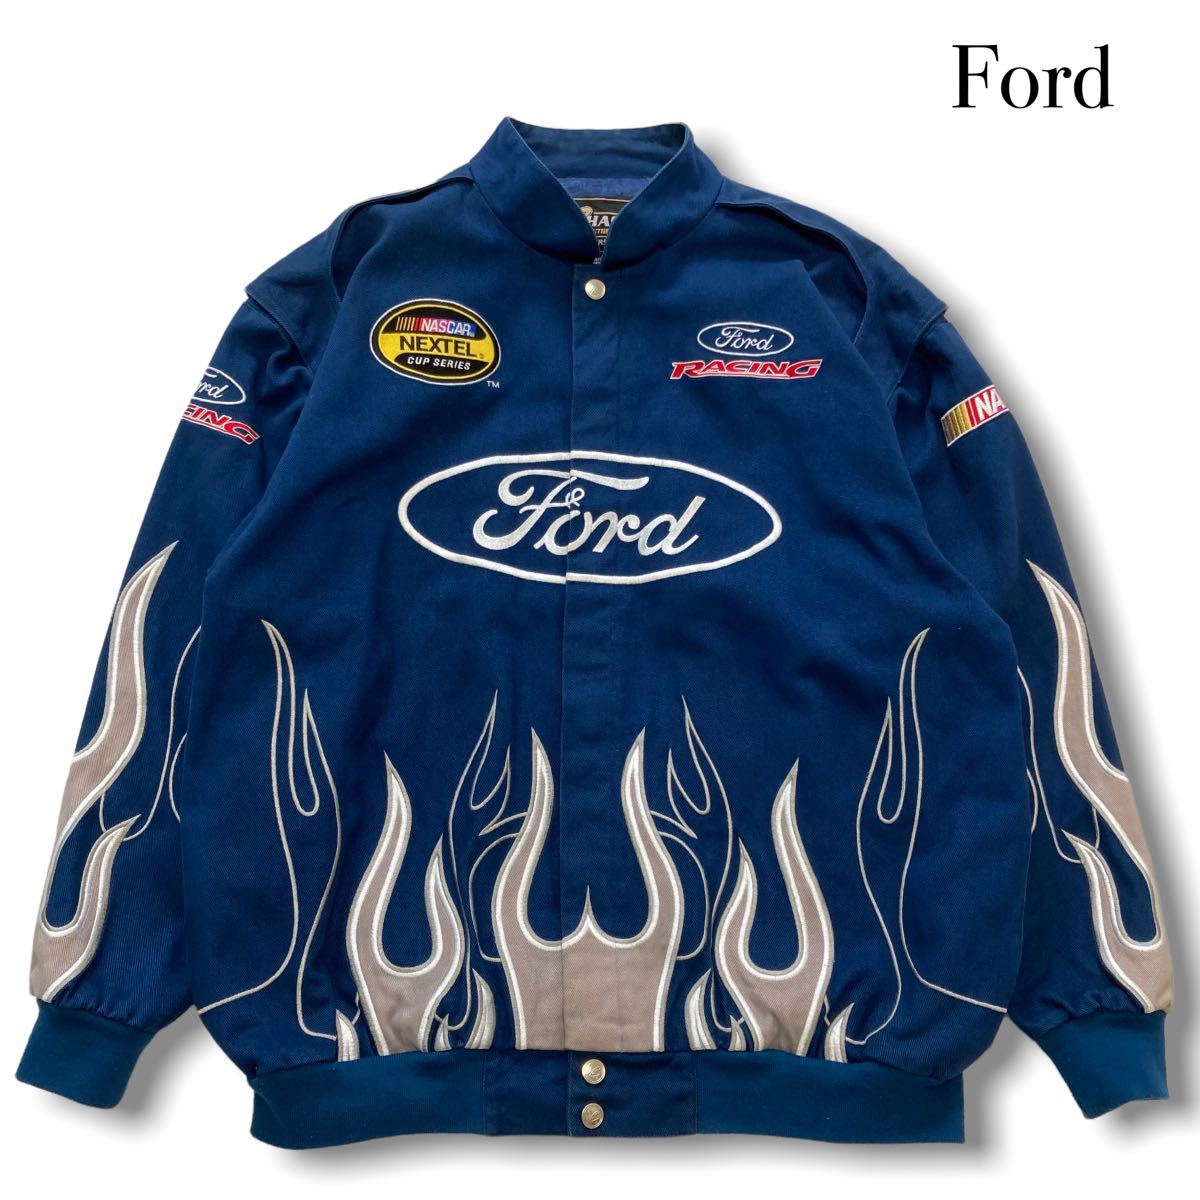 CHASE】 『Ford』フォードレーシングジャケット ファイヤーパターン刺繍 チェイス コットンジャケット 古着 企業系 ワッペン 